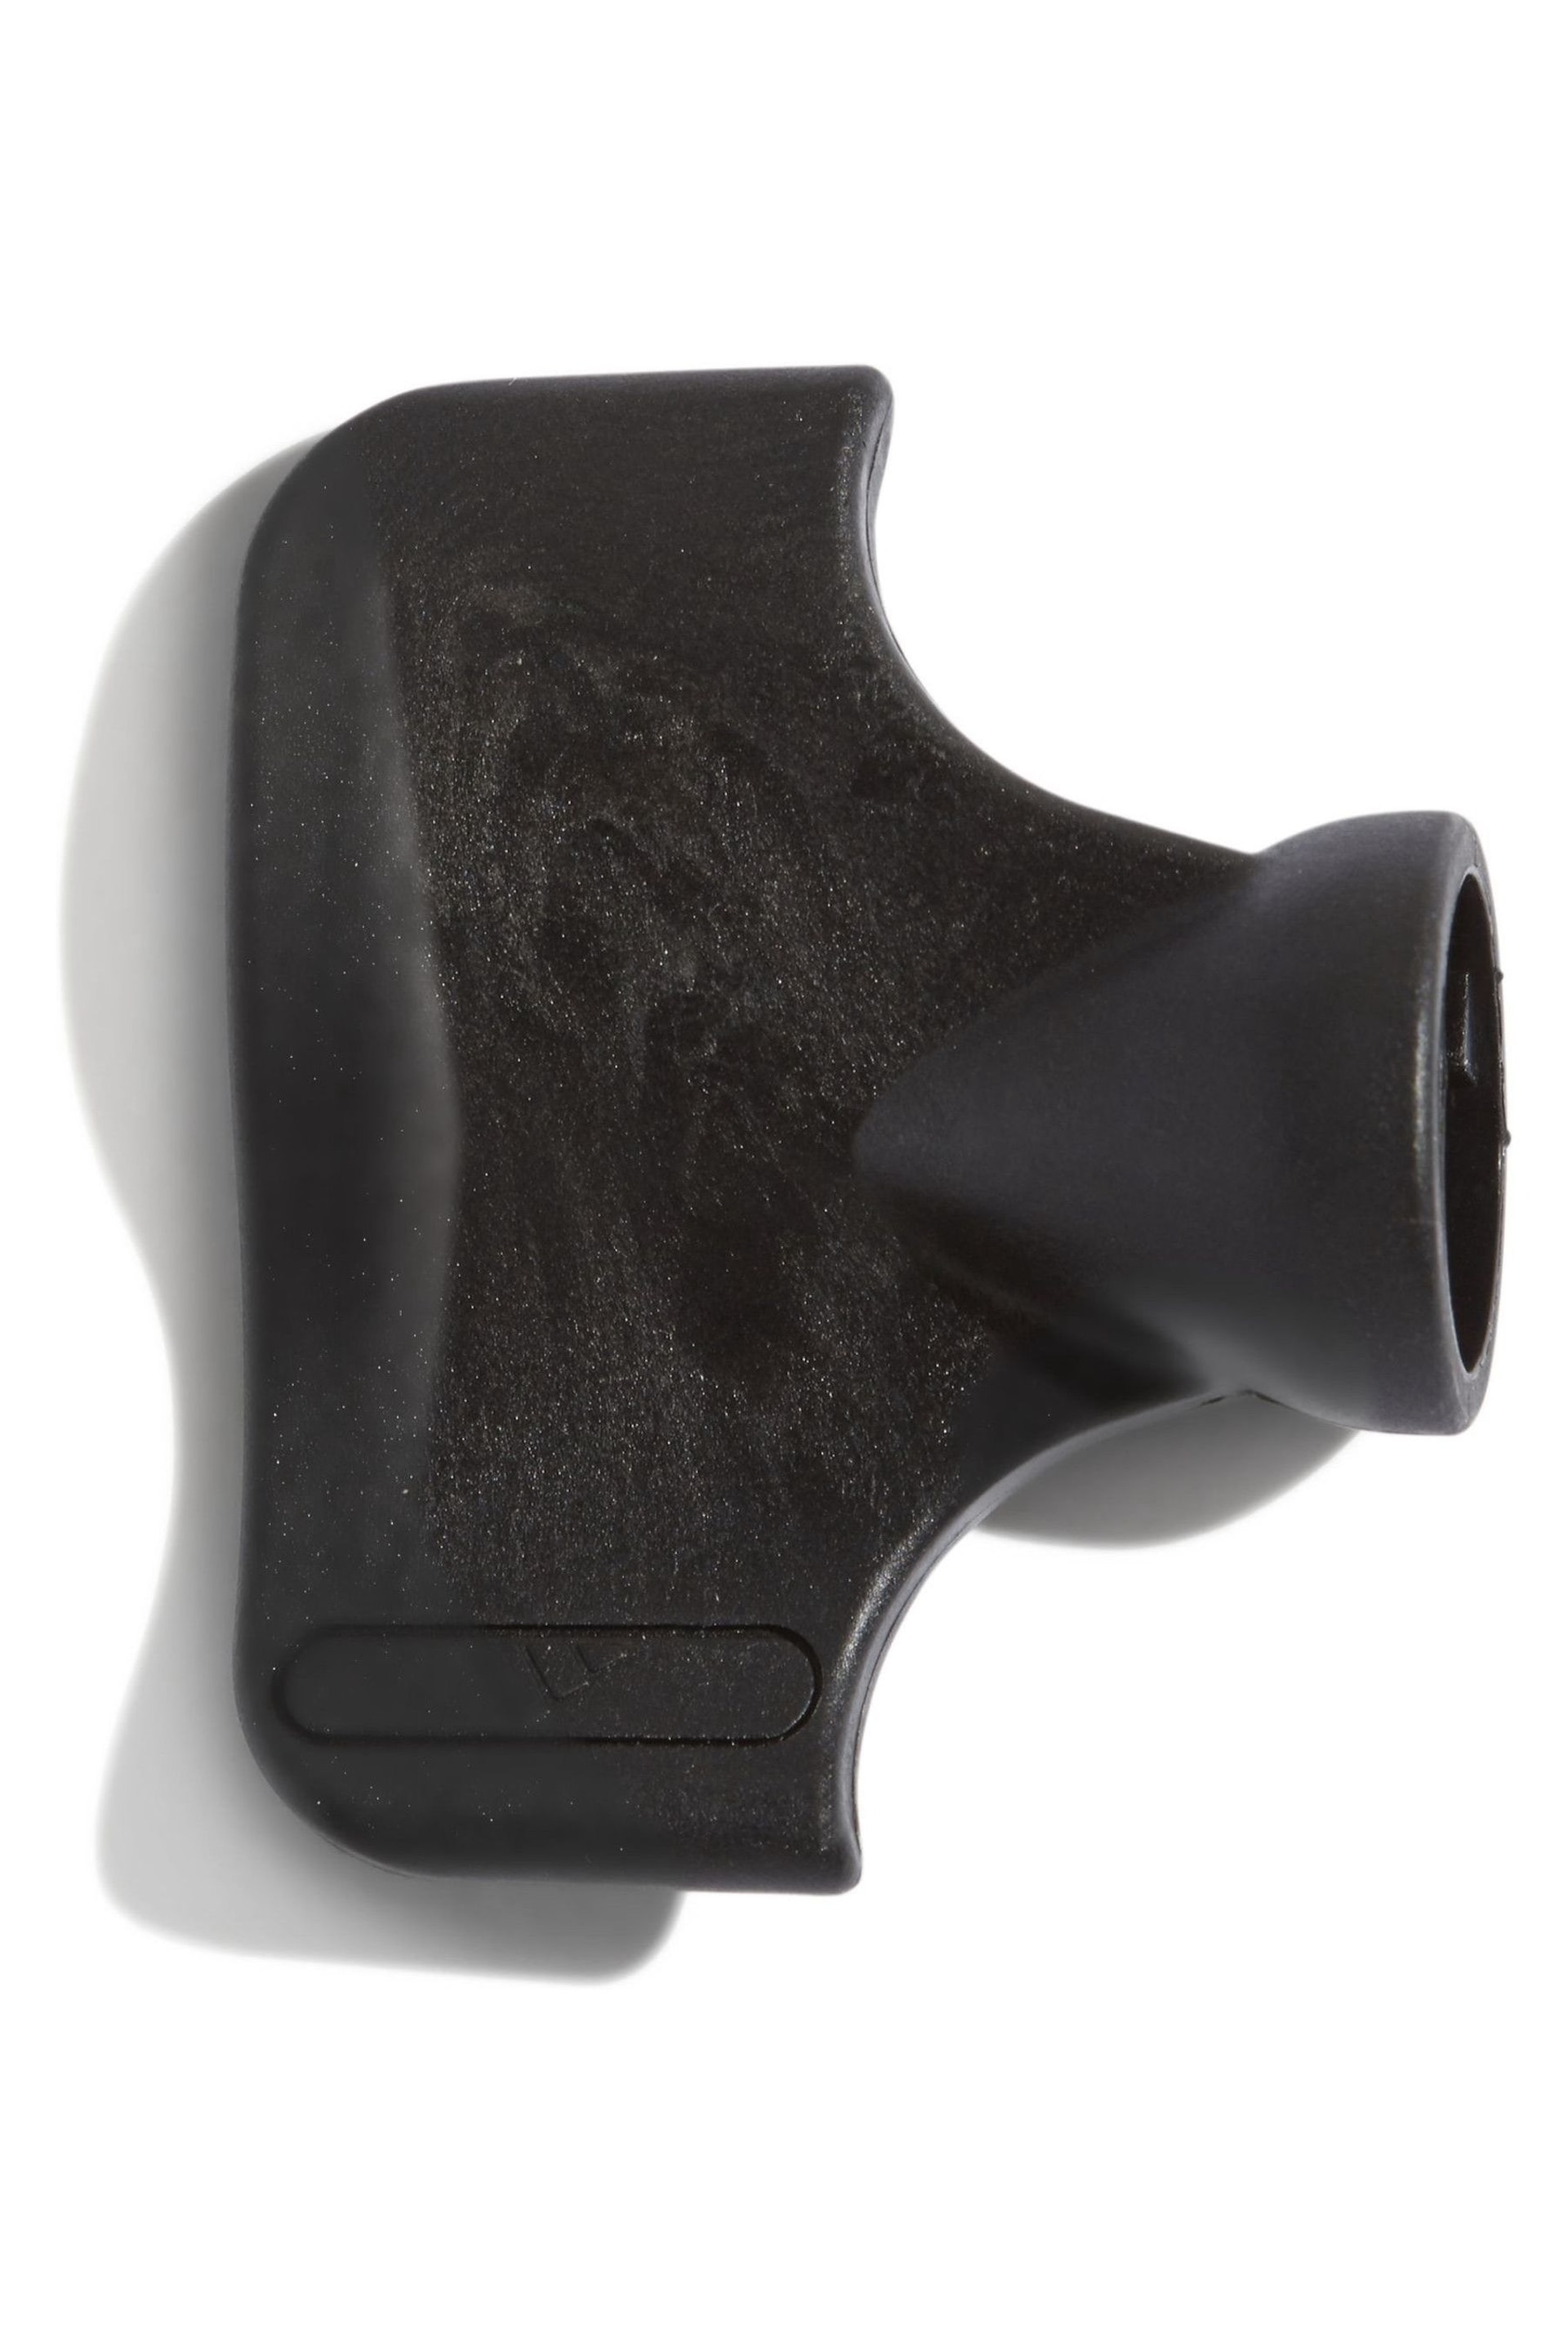 adidas Black Performance Stud Wrench - Image 1 of 3